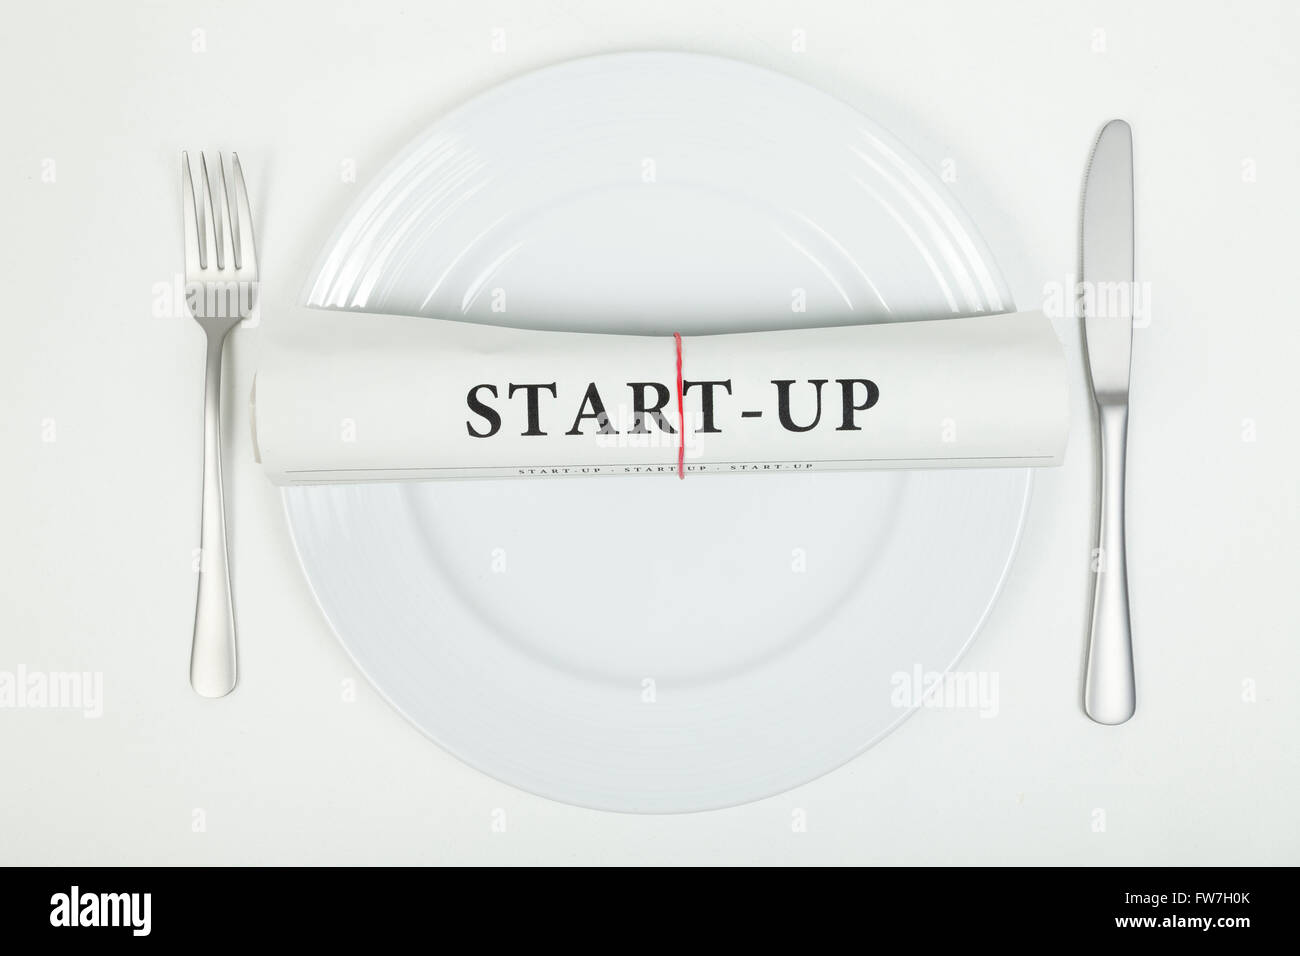 Start-up Stock Photo